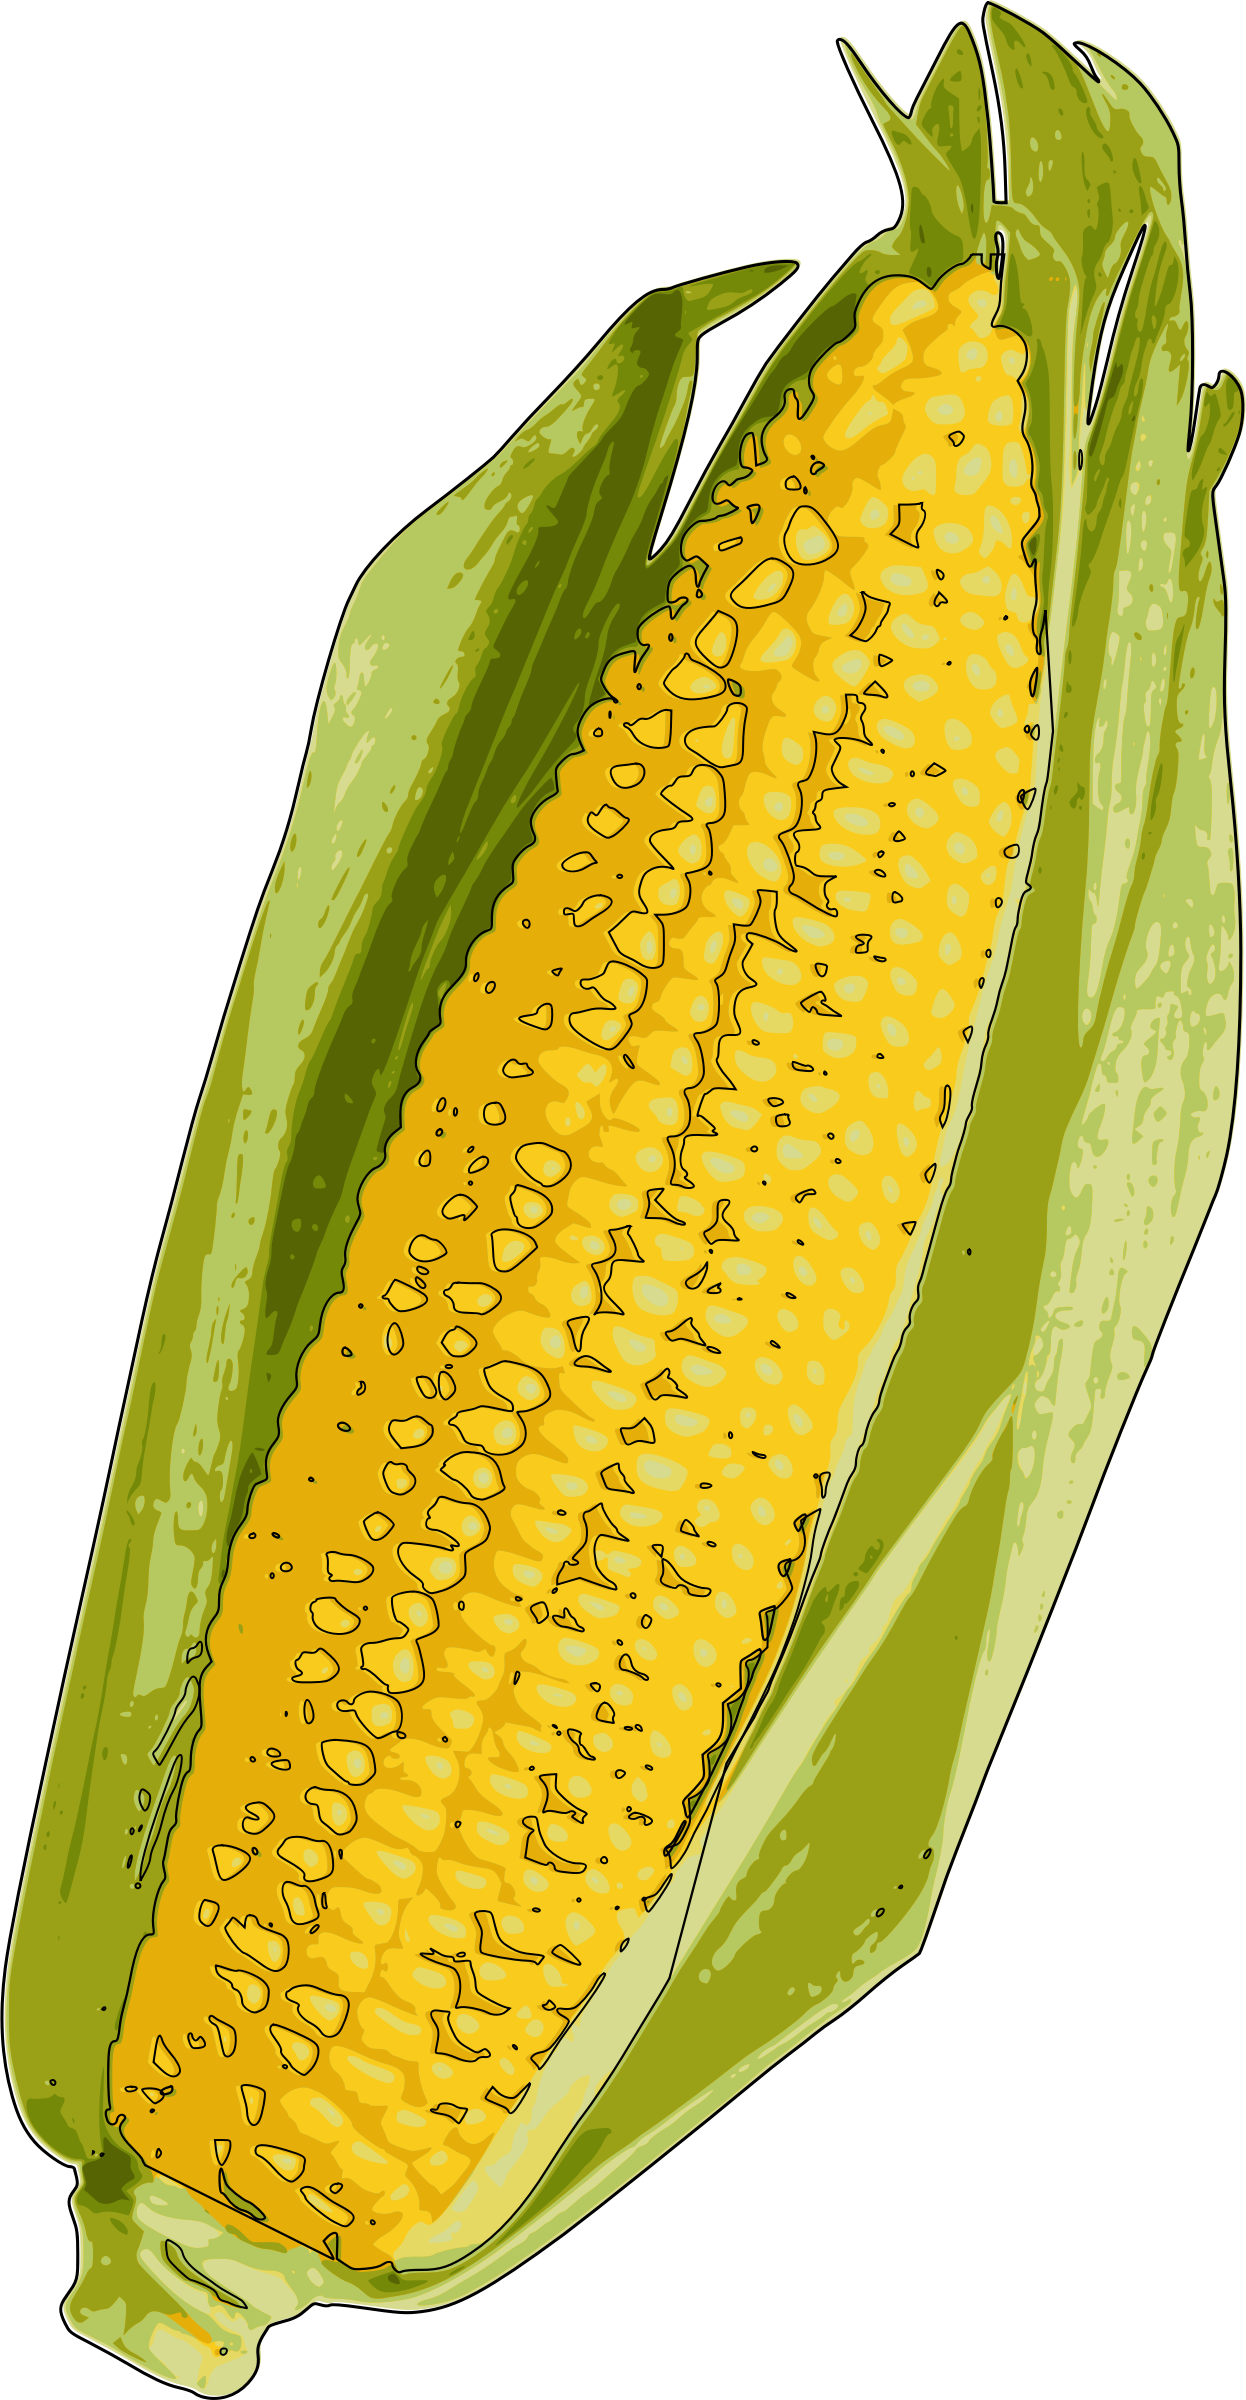 Corn yellow corn